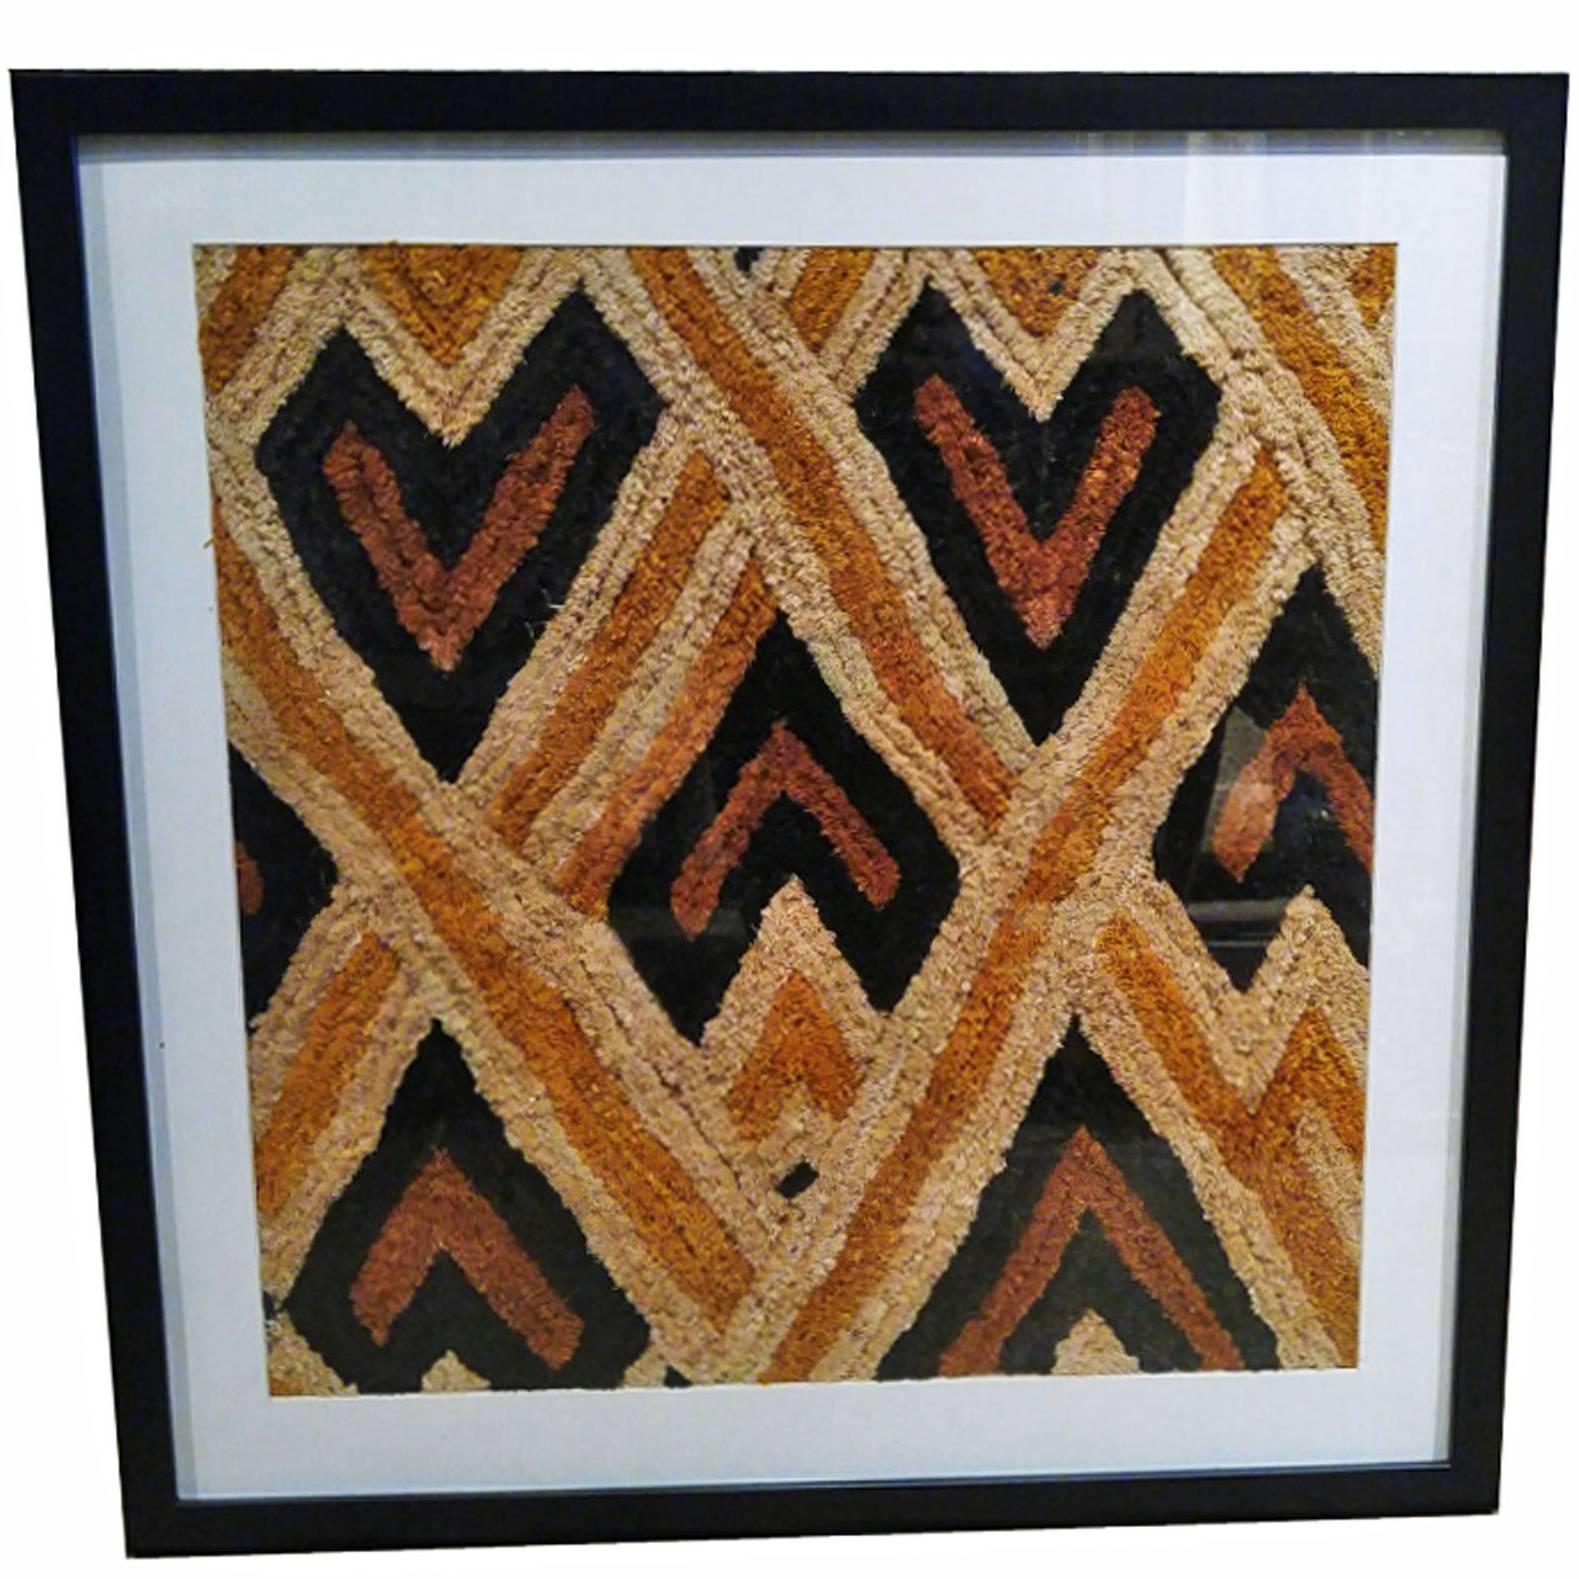 Kuba Cloth in Woven Raffia from Congo, Framed